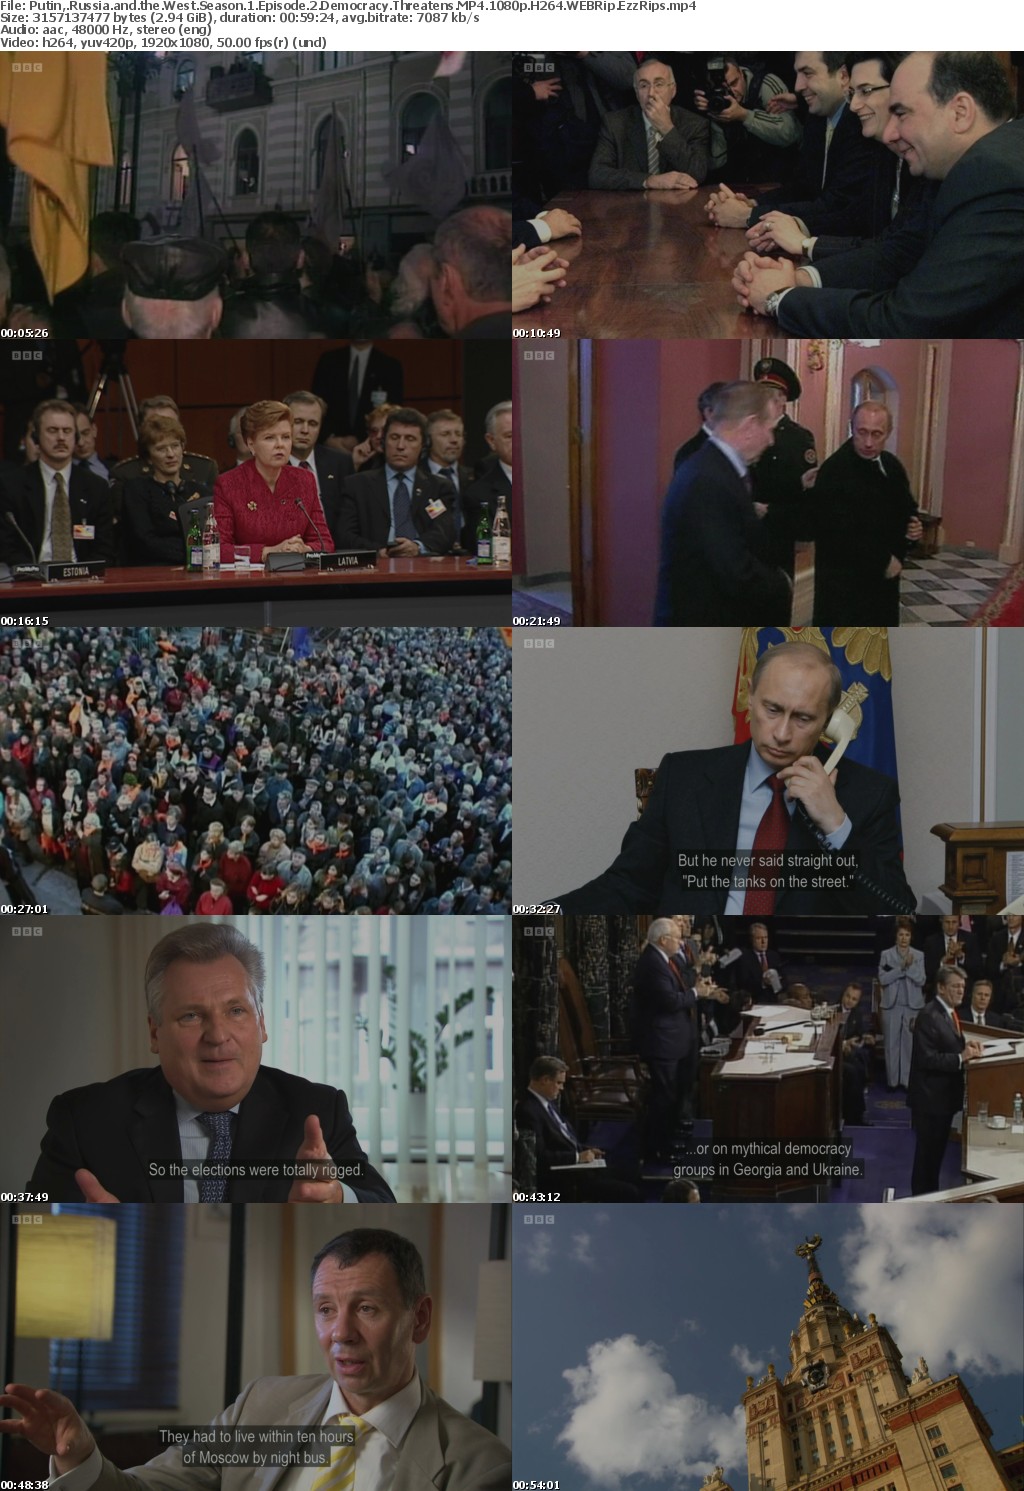 Putin, Russia and the West Season 1 Episode 2 Democracy Threatens MP4 1080p H264 WEBRip EzzRips